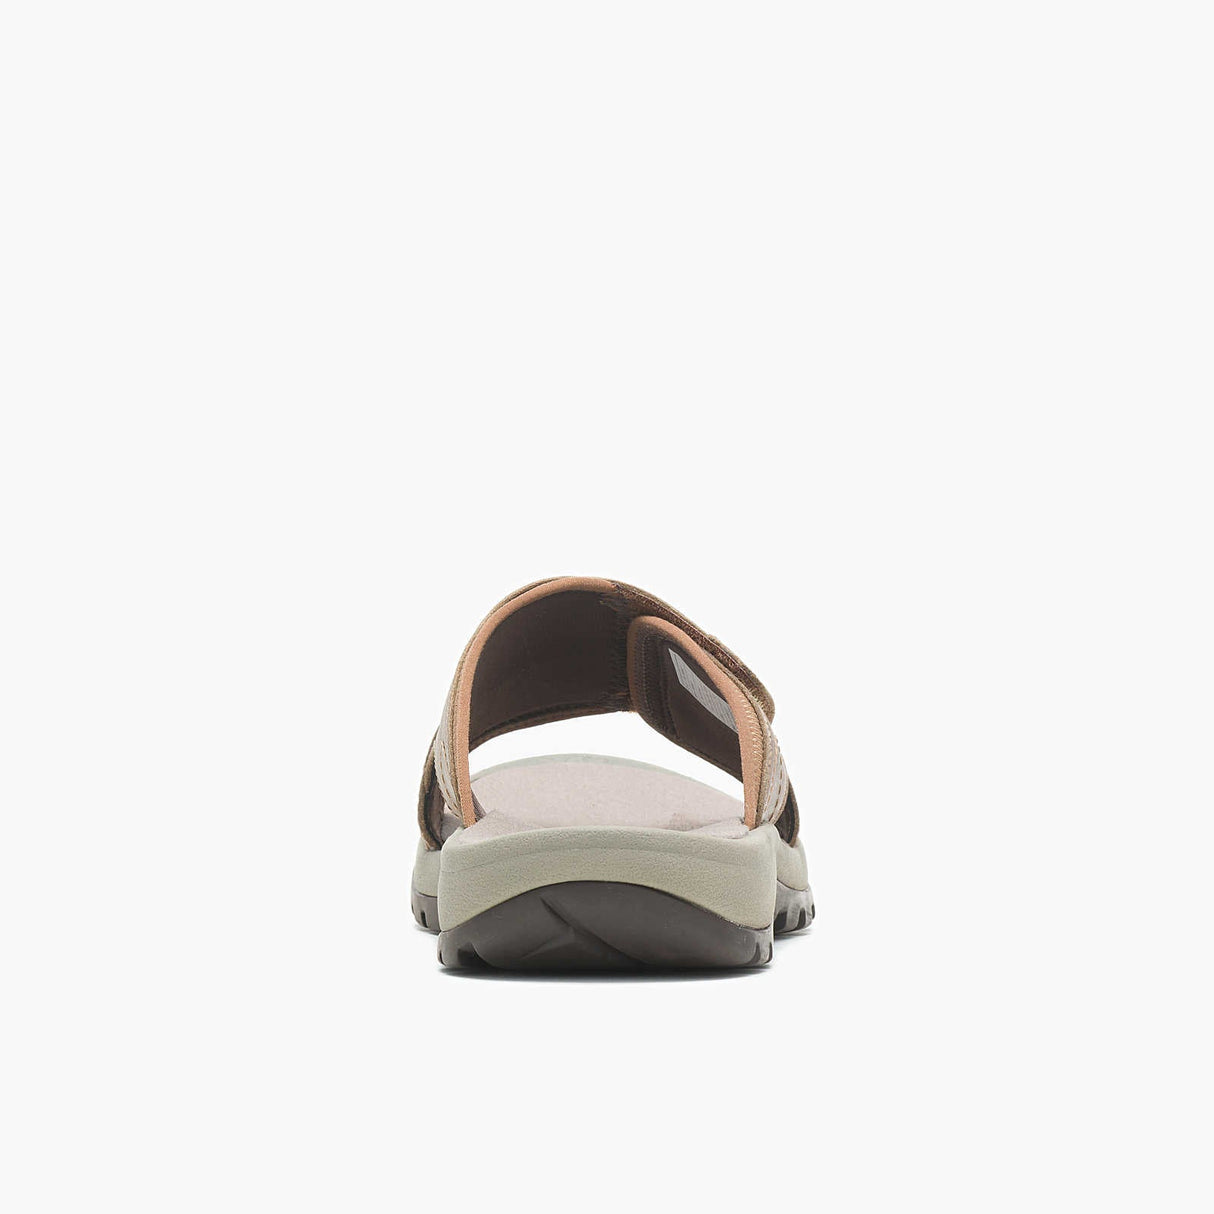 Merrell Men's Sandspur 2 Slide Sandals - A&M Clothing & Shoes